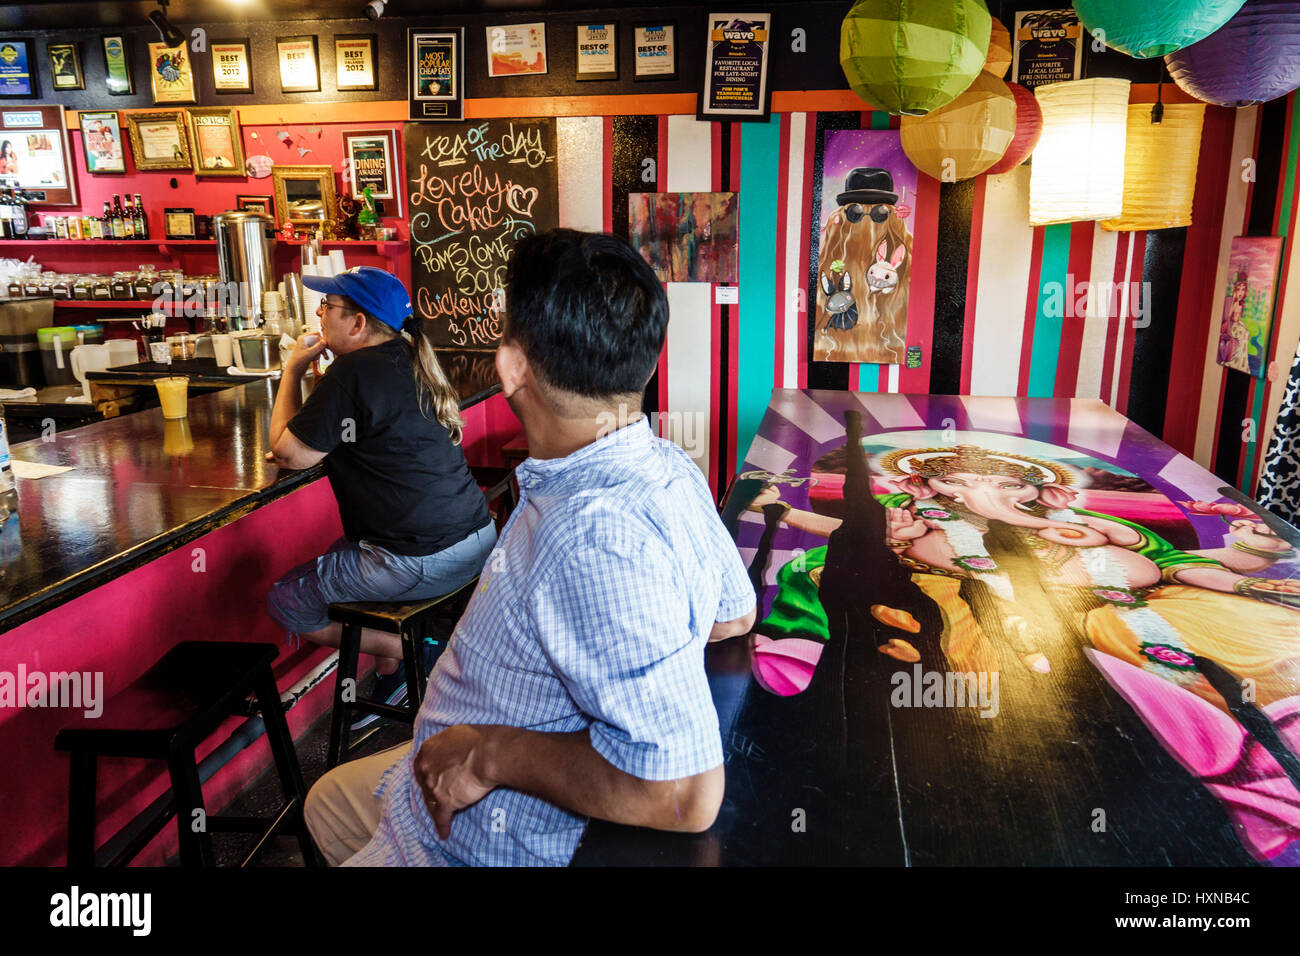 Florida,Pom Pom's Teahouse Sandwicheria,coffeehouse,cafe,counter,decor,Asian Asians ethnic immigrant immigrants minority minorities,adult Stock Photo - Alamy